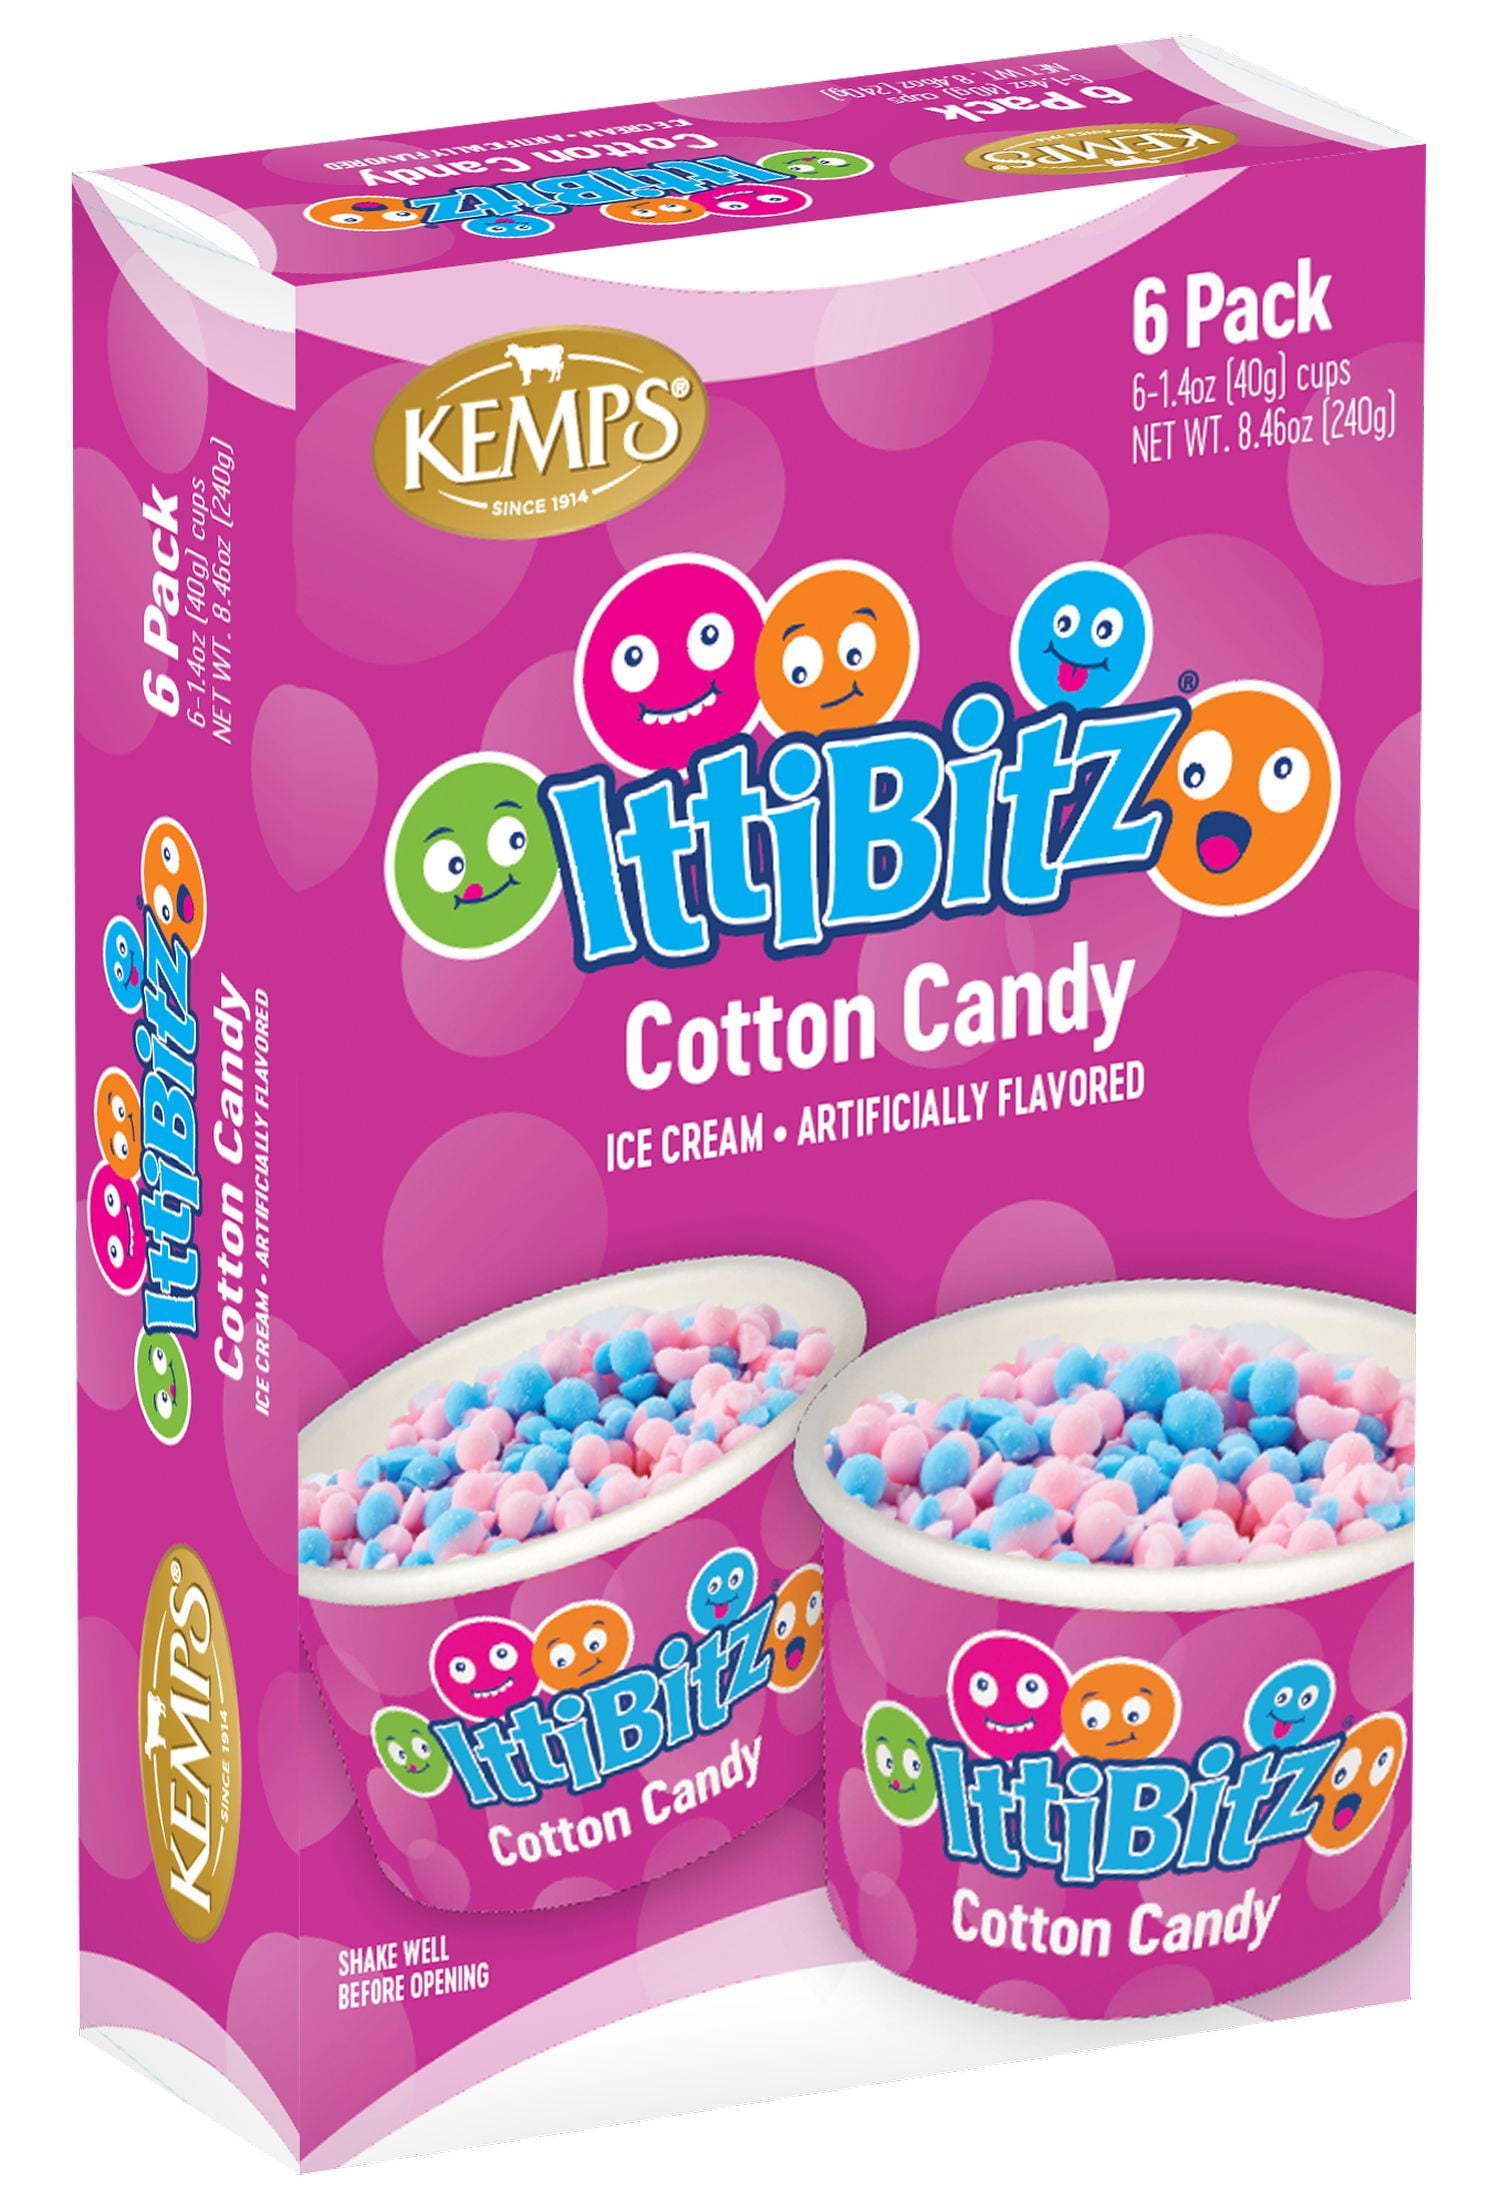 Kemps IttiBitz Cotton Candy 1.4 oz / 6 Pak